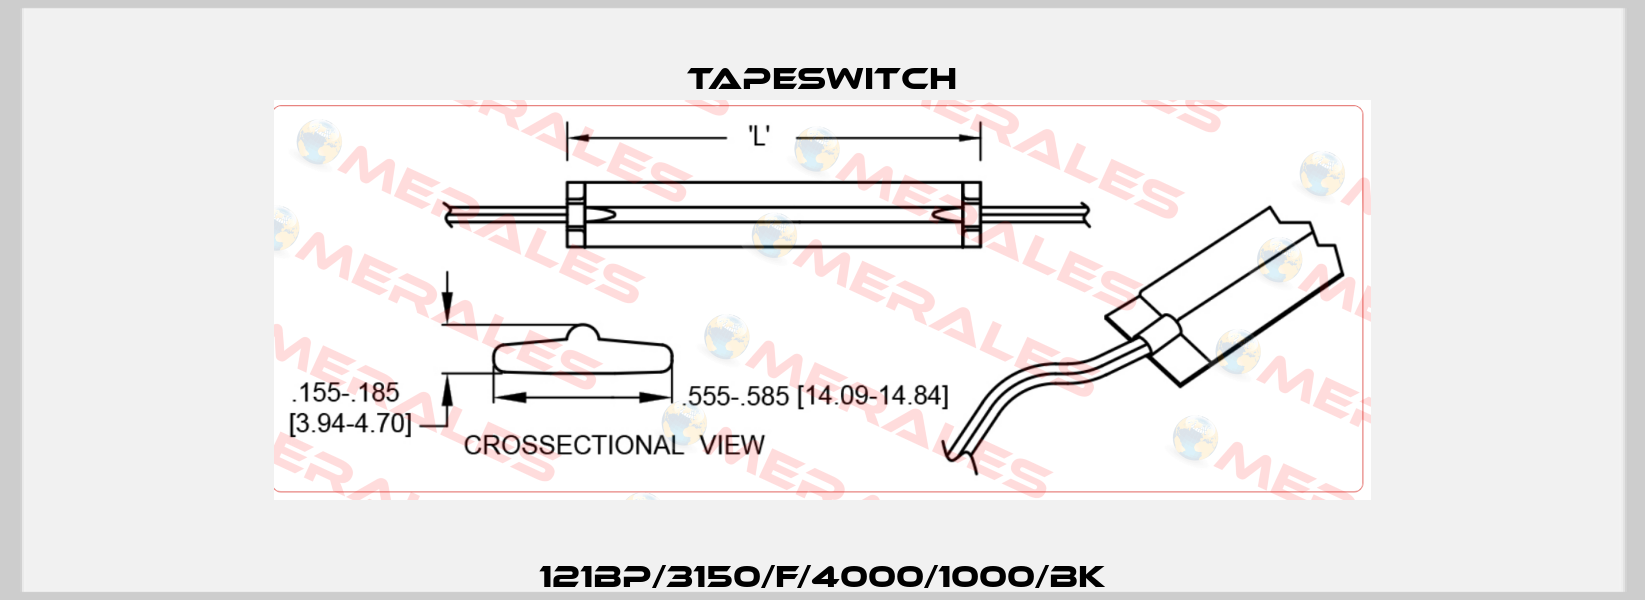 121BP/3150/F/4000/1000/BK Tapeswitch